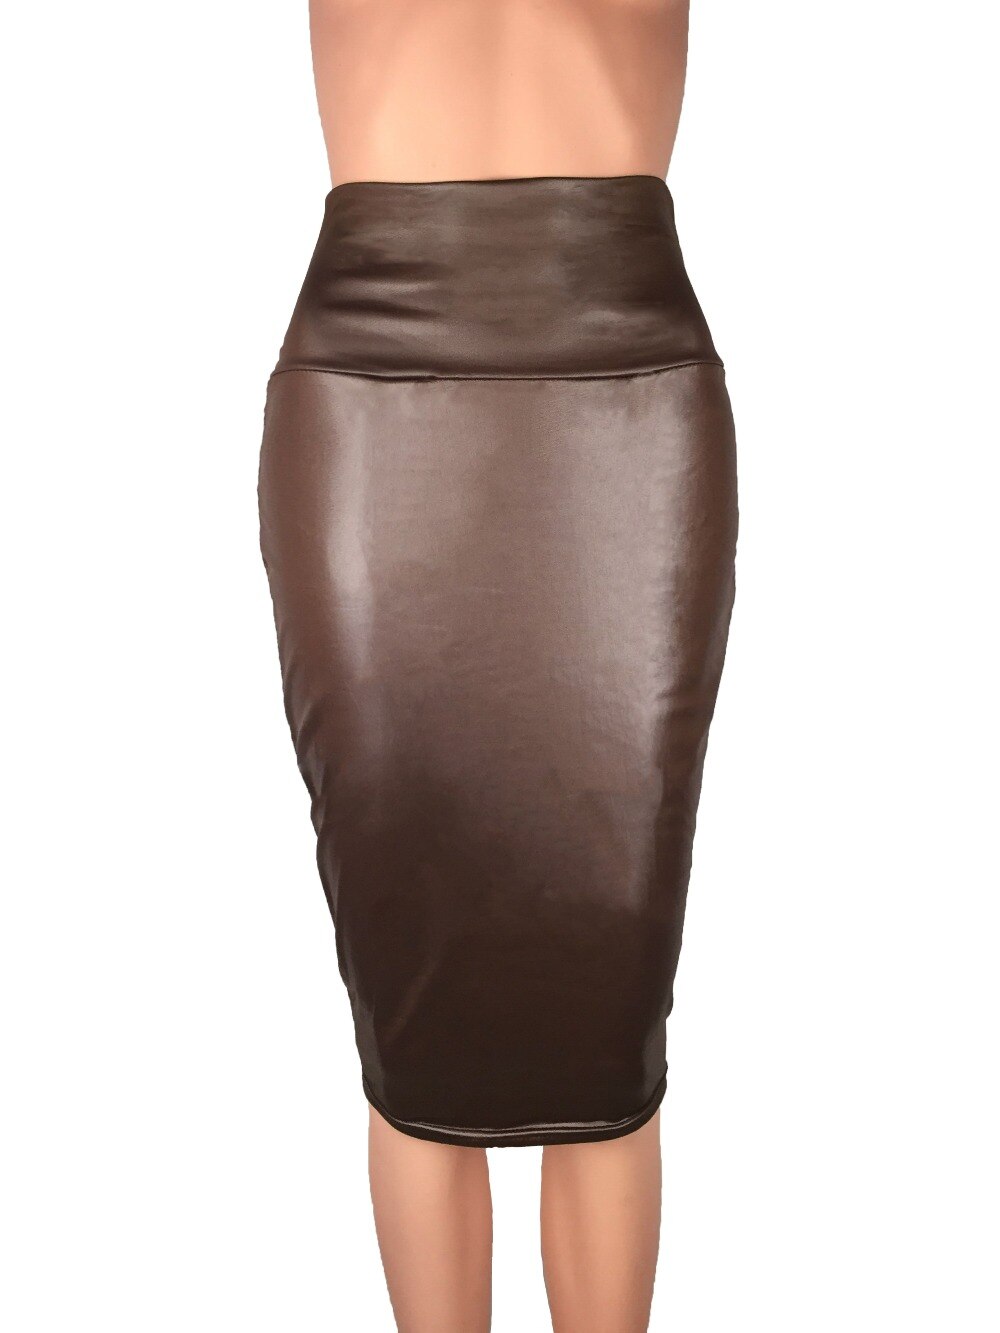 Bohocotol 19 summer women plus size high-waist faux leather pencil skirt black leather skirt S/M/L/XXXL Drop shipping 3